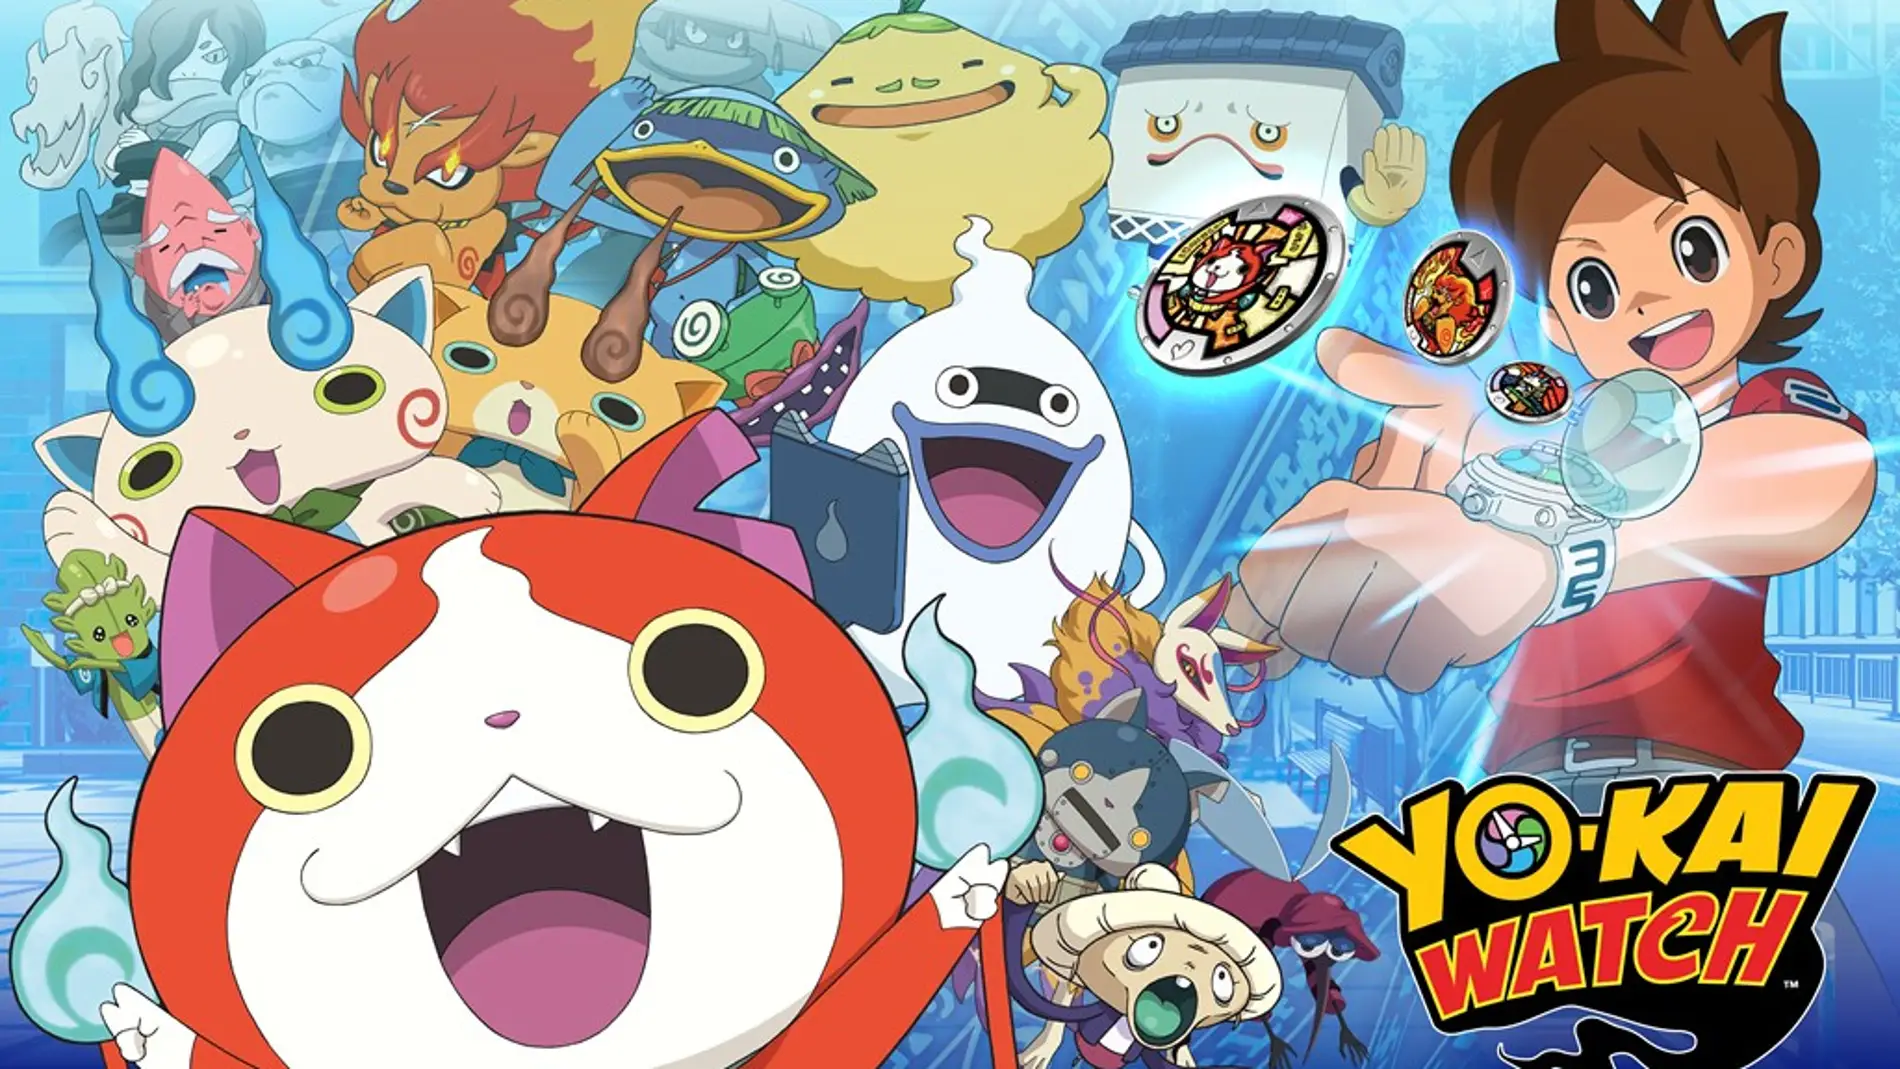 Yo-Kai Watch 4, para Nintendo Switch, muestra su primera imagen